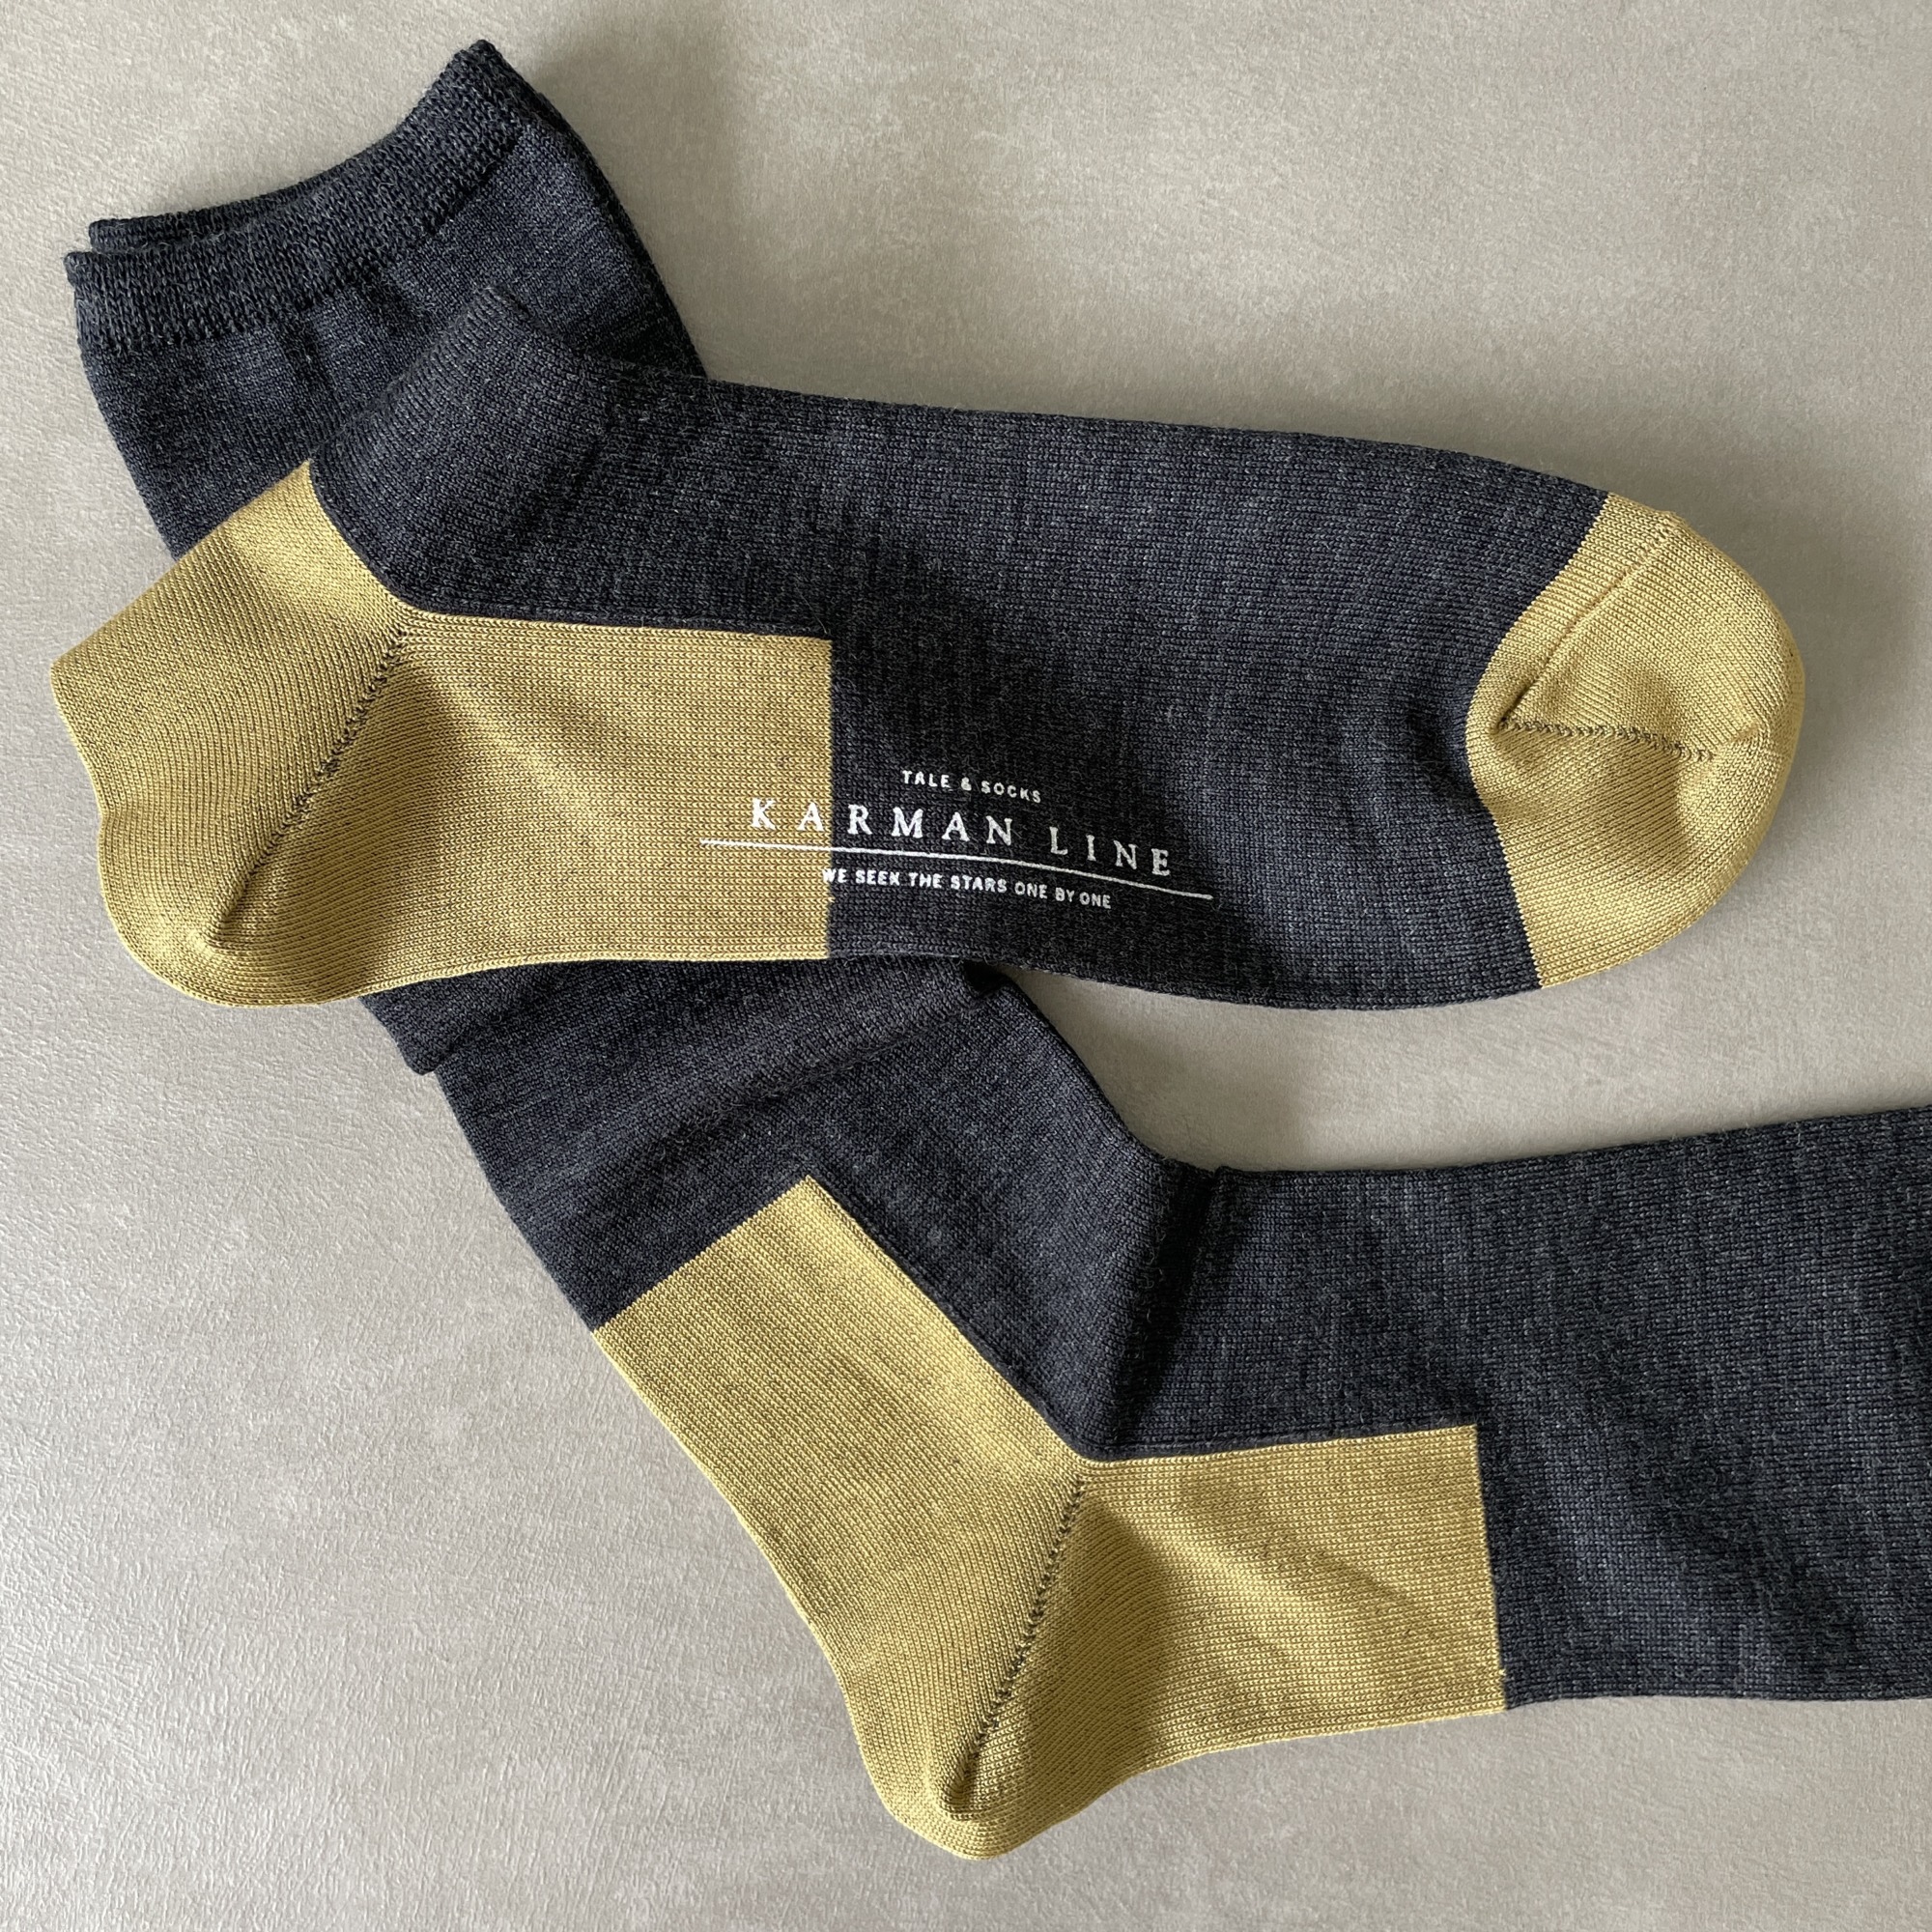 KARMAN LINE GEMINI / Socks / Charcoal & Olive / 26-28cm